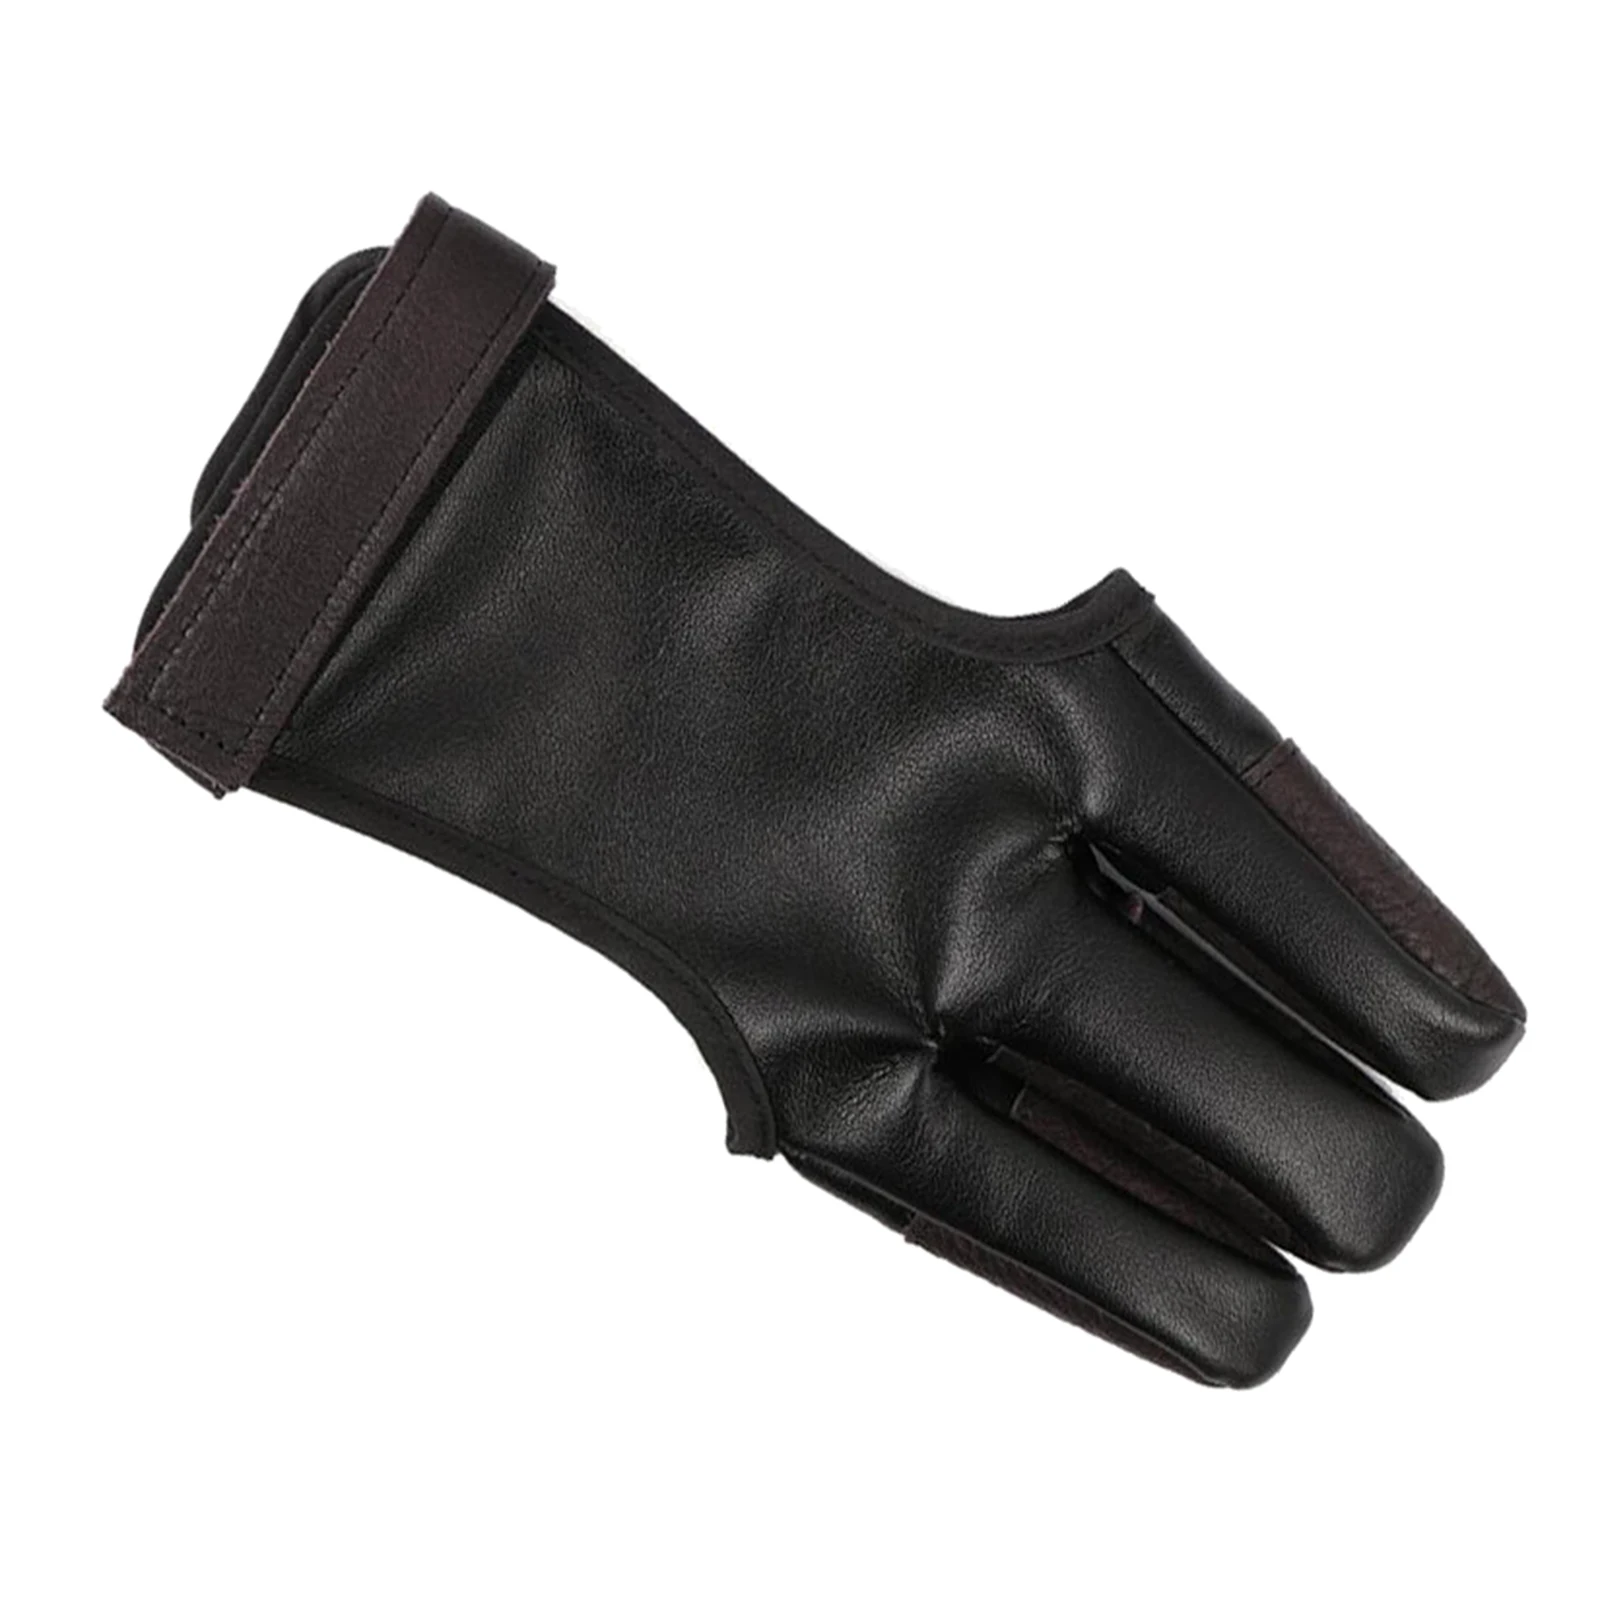 Dark Archer Tactical 3 finger shooting glove 